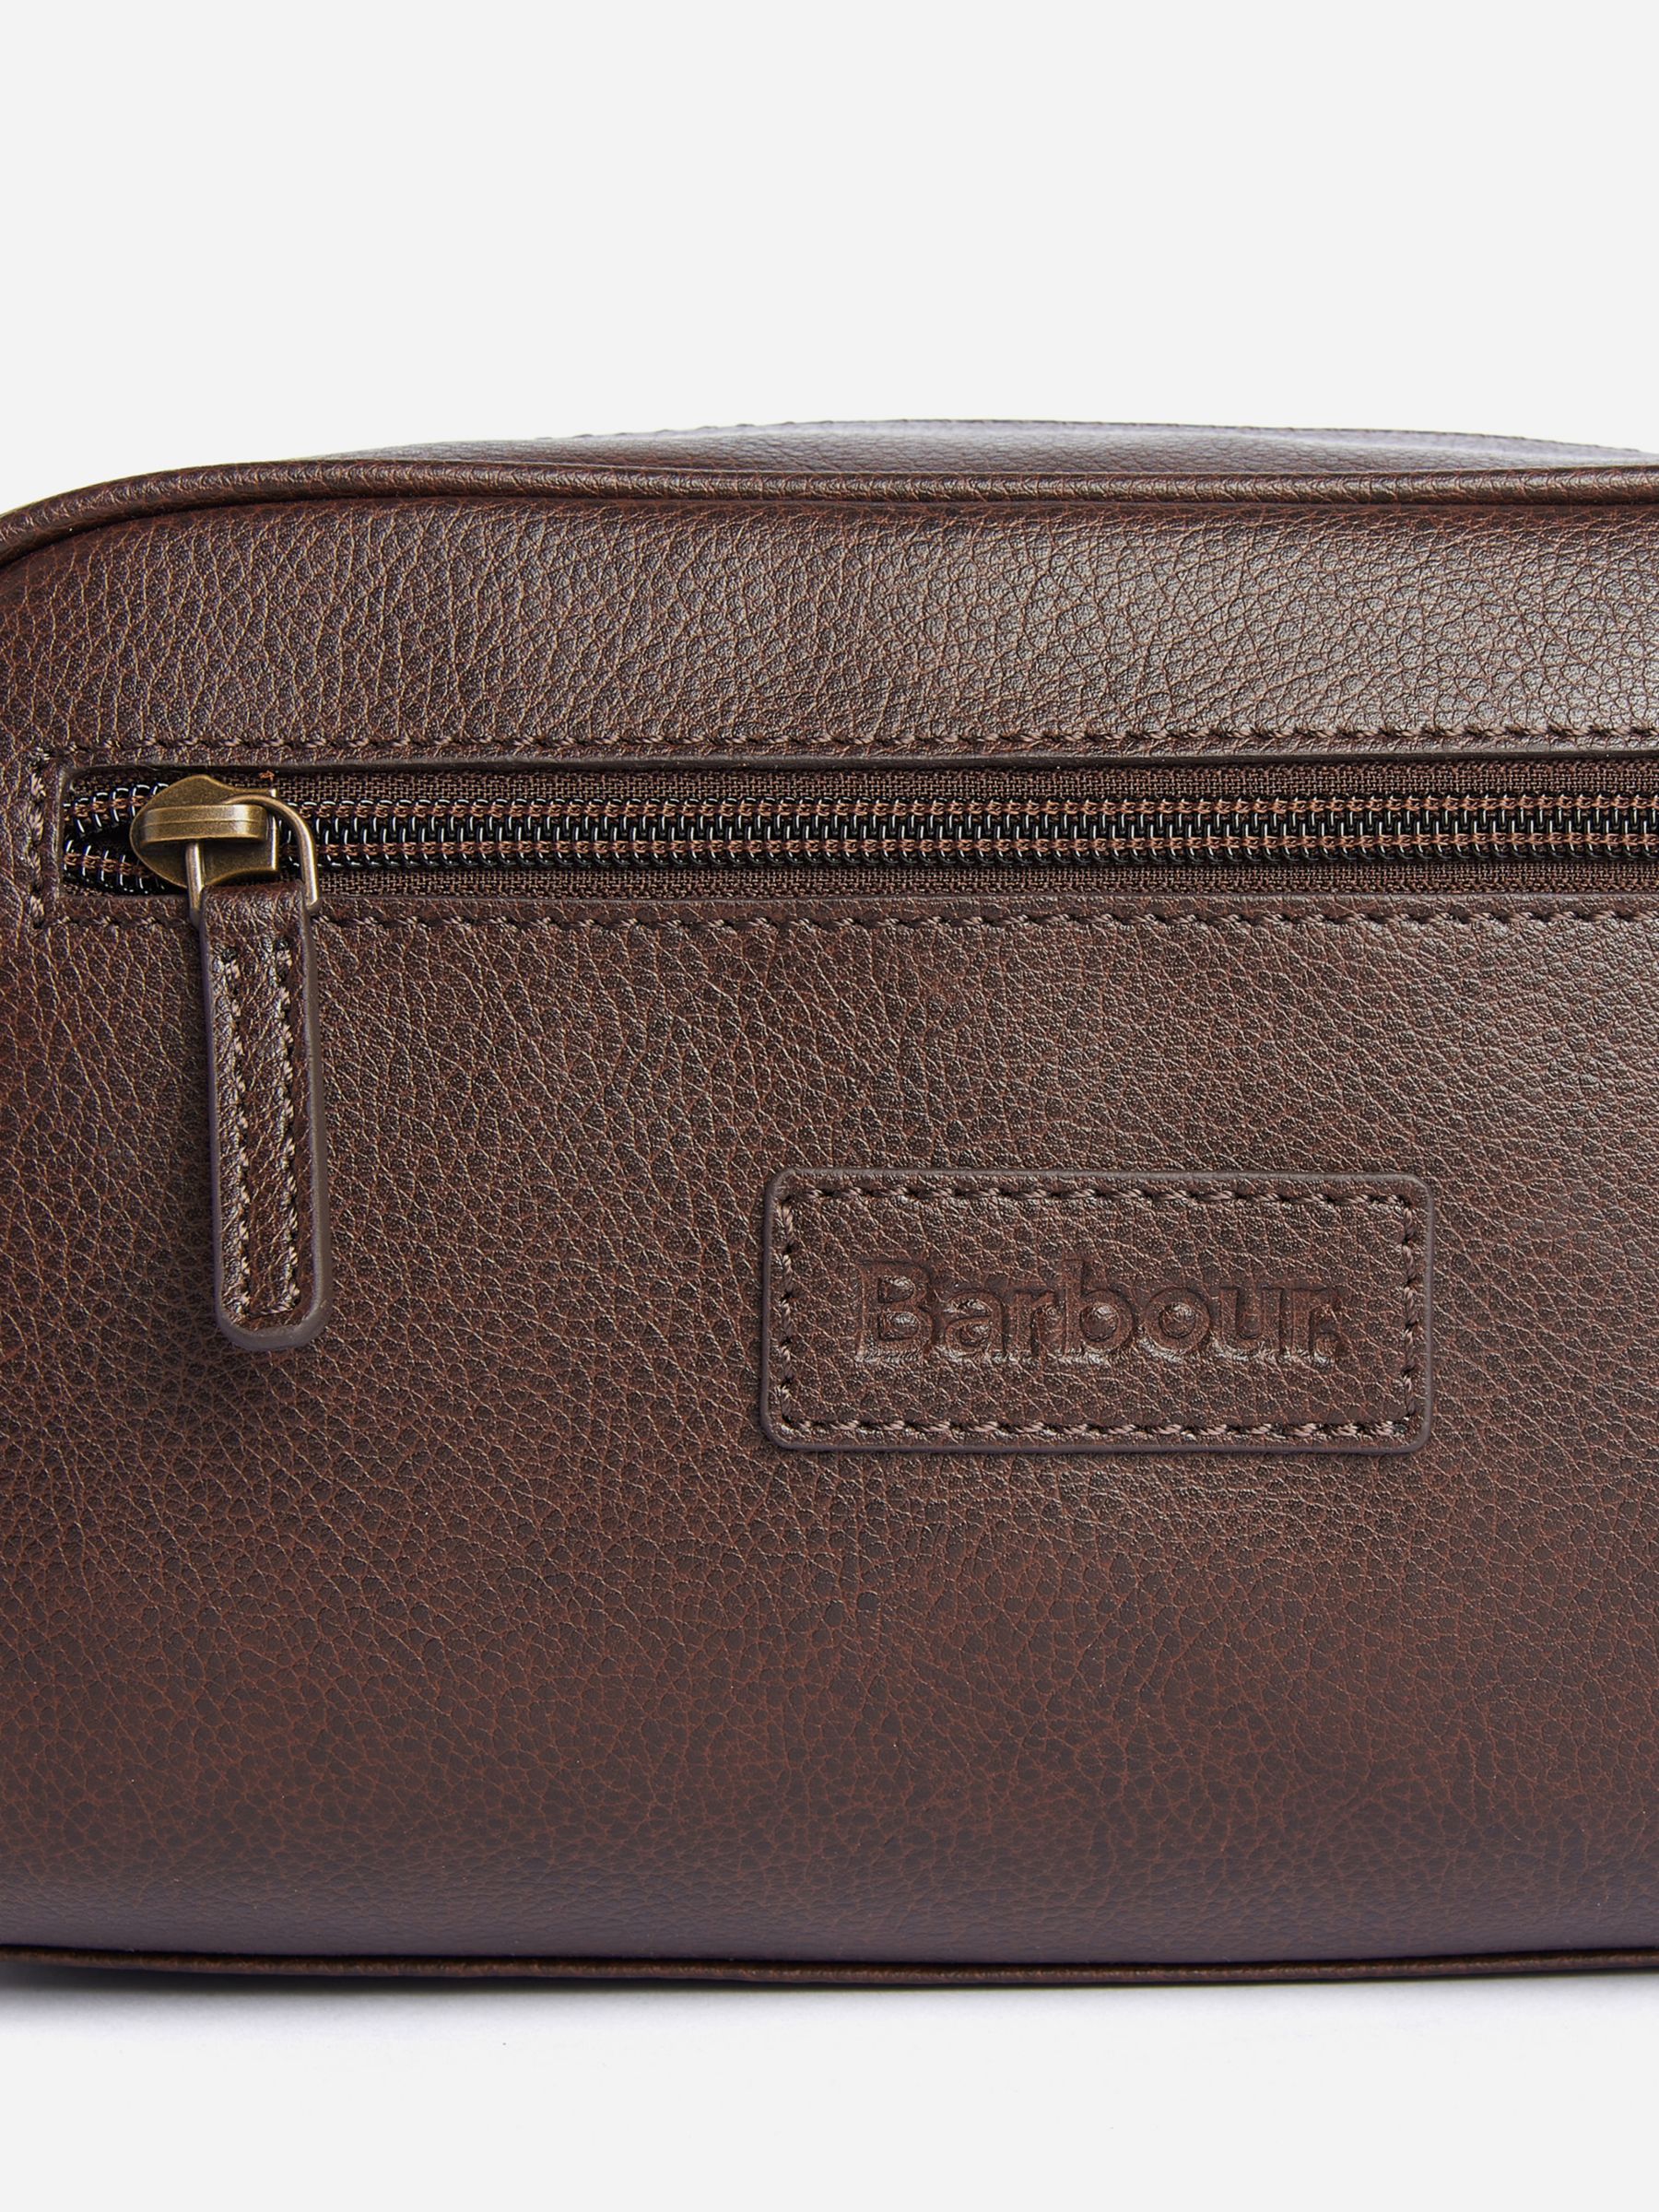 Barbour Leather Wash Bag, Dark Brown